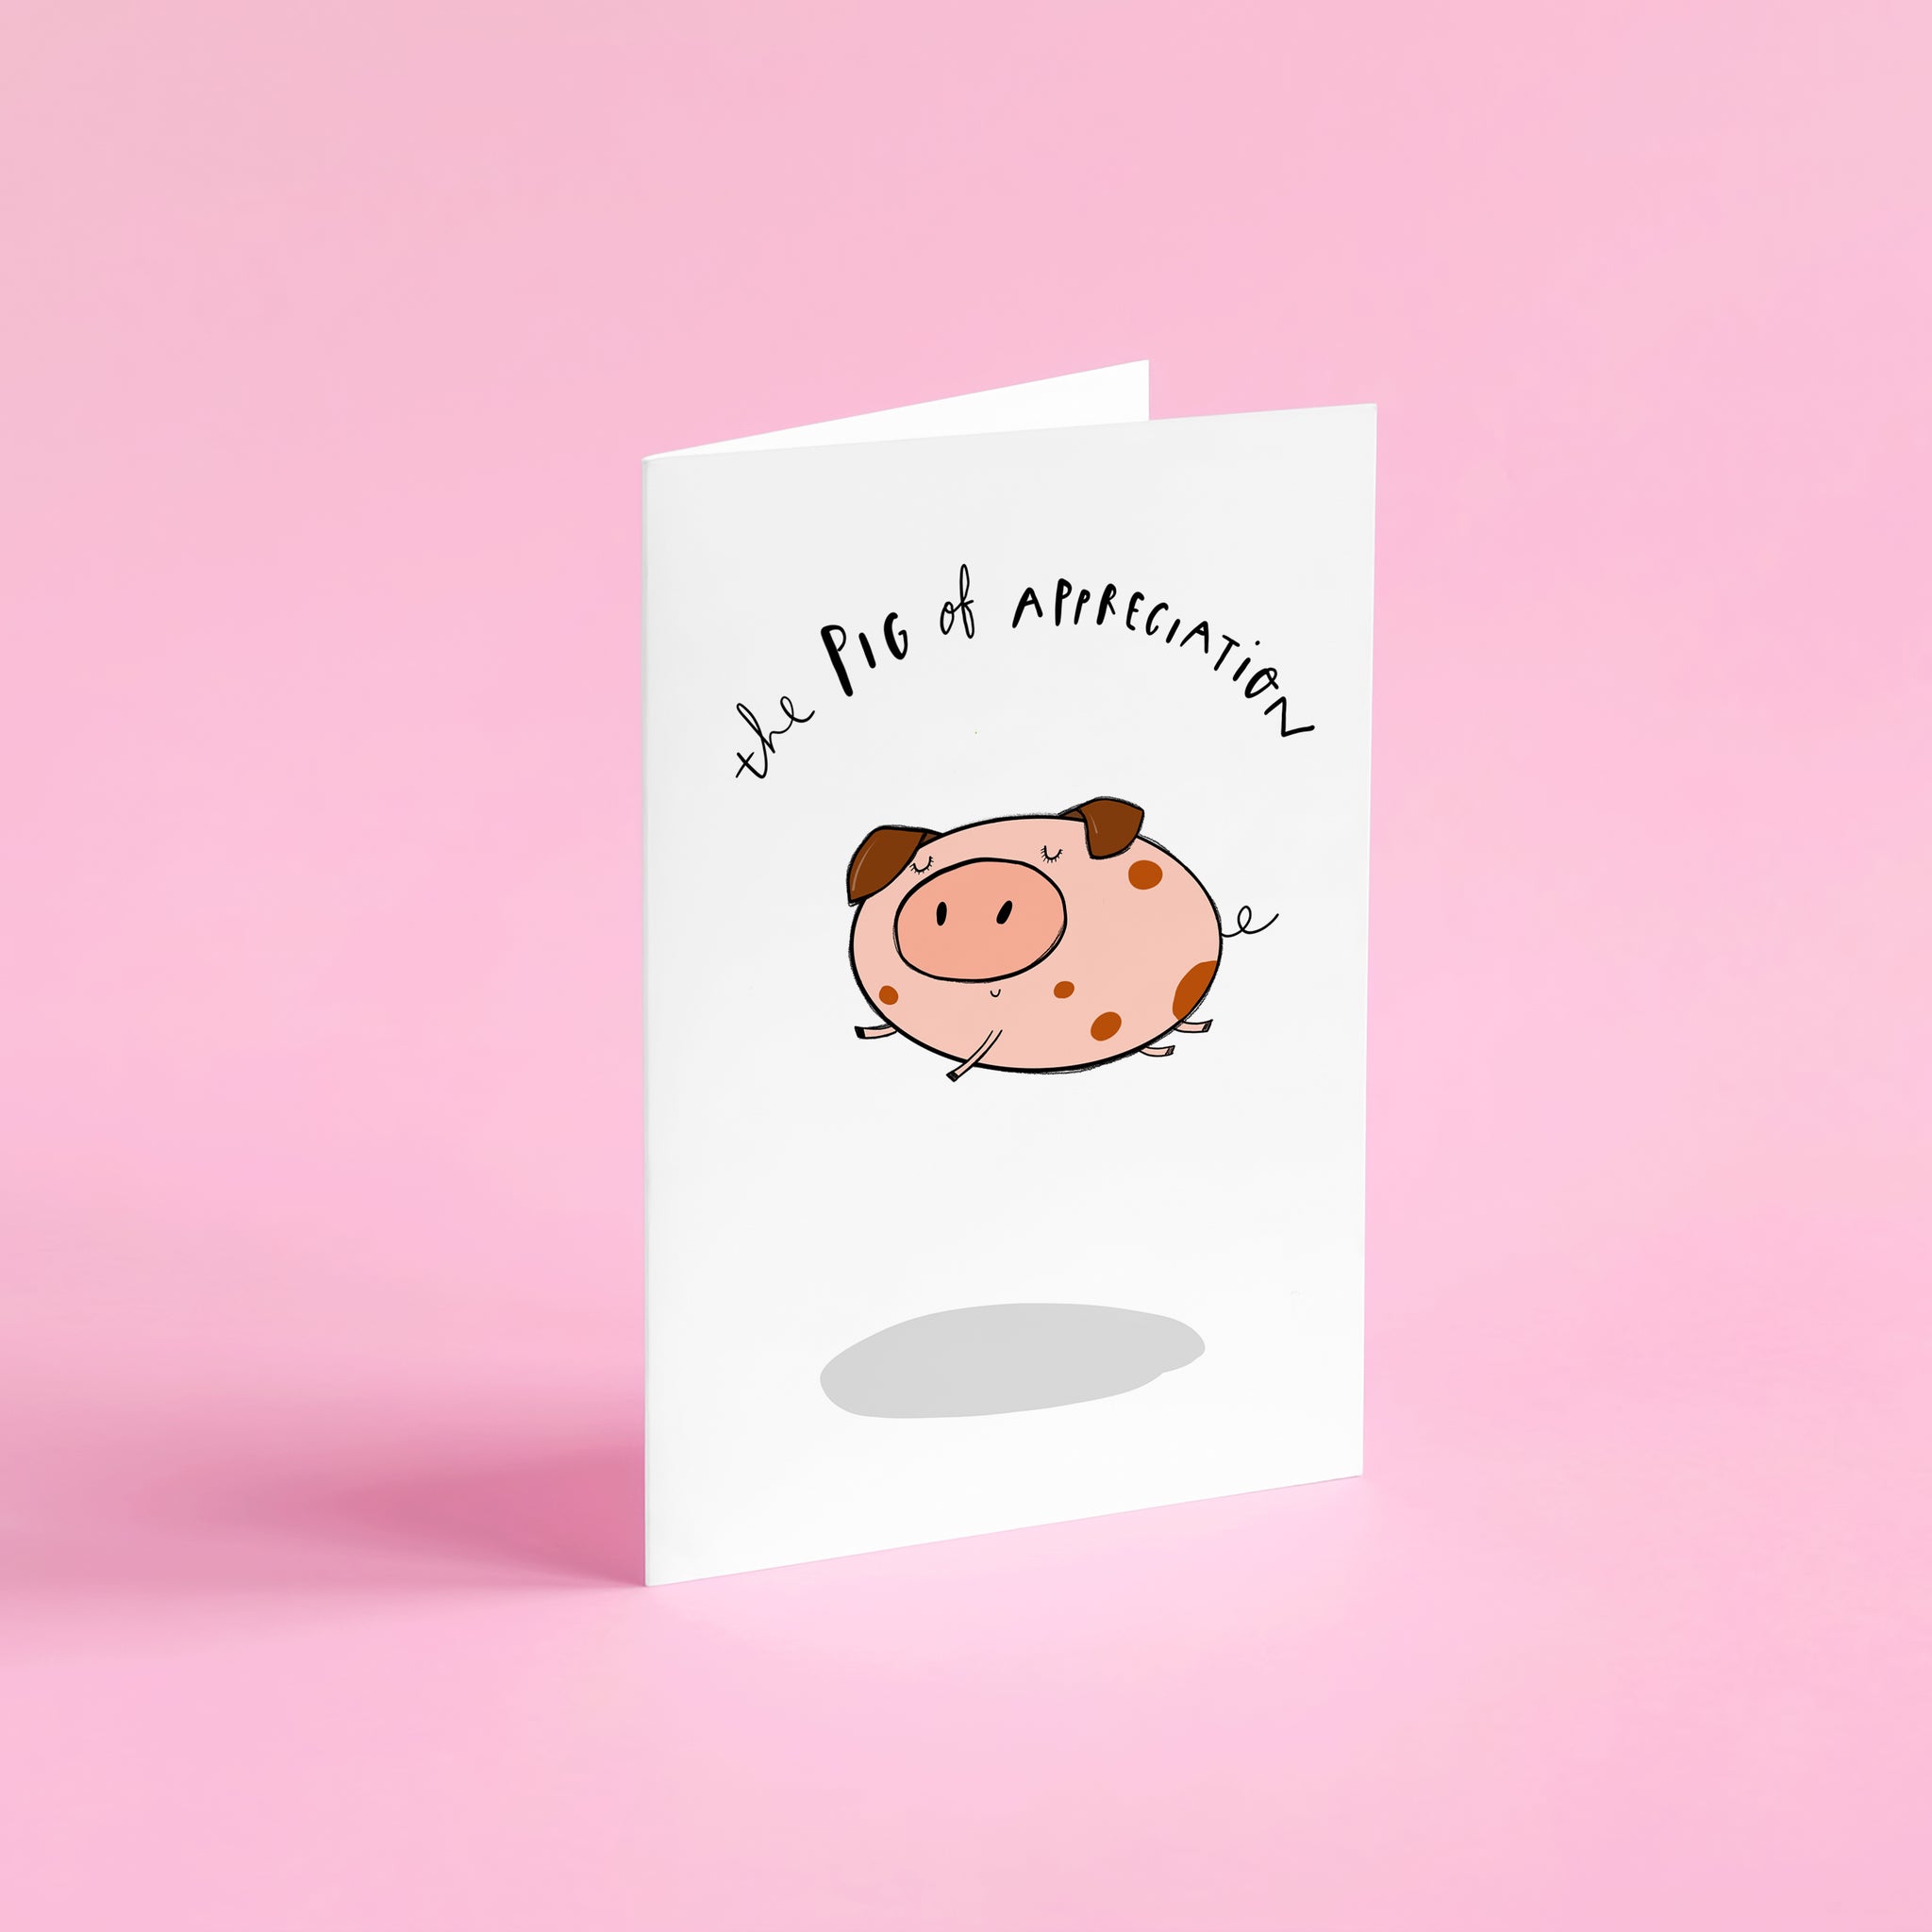 The Pig of Appreciation card